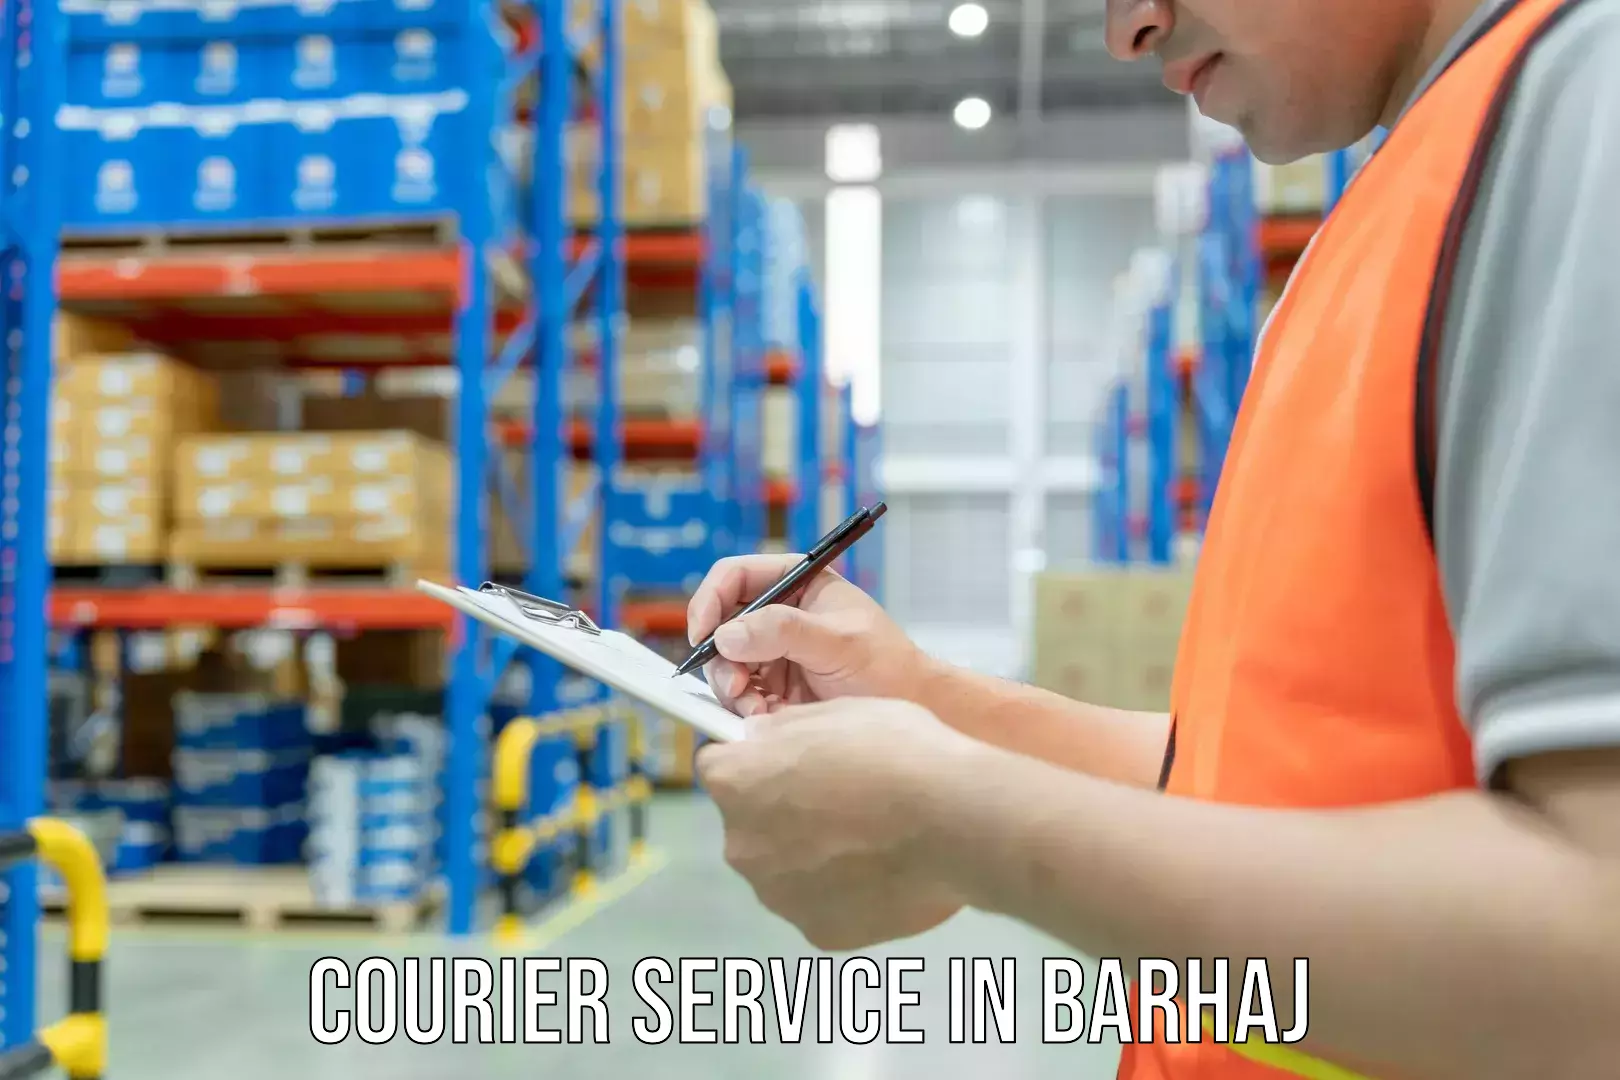 Logistics and distribution in Barhaj